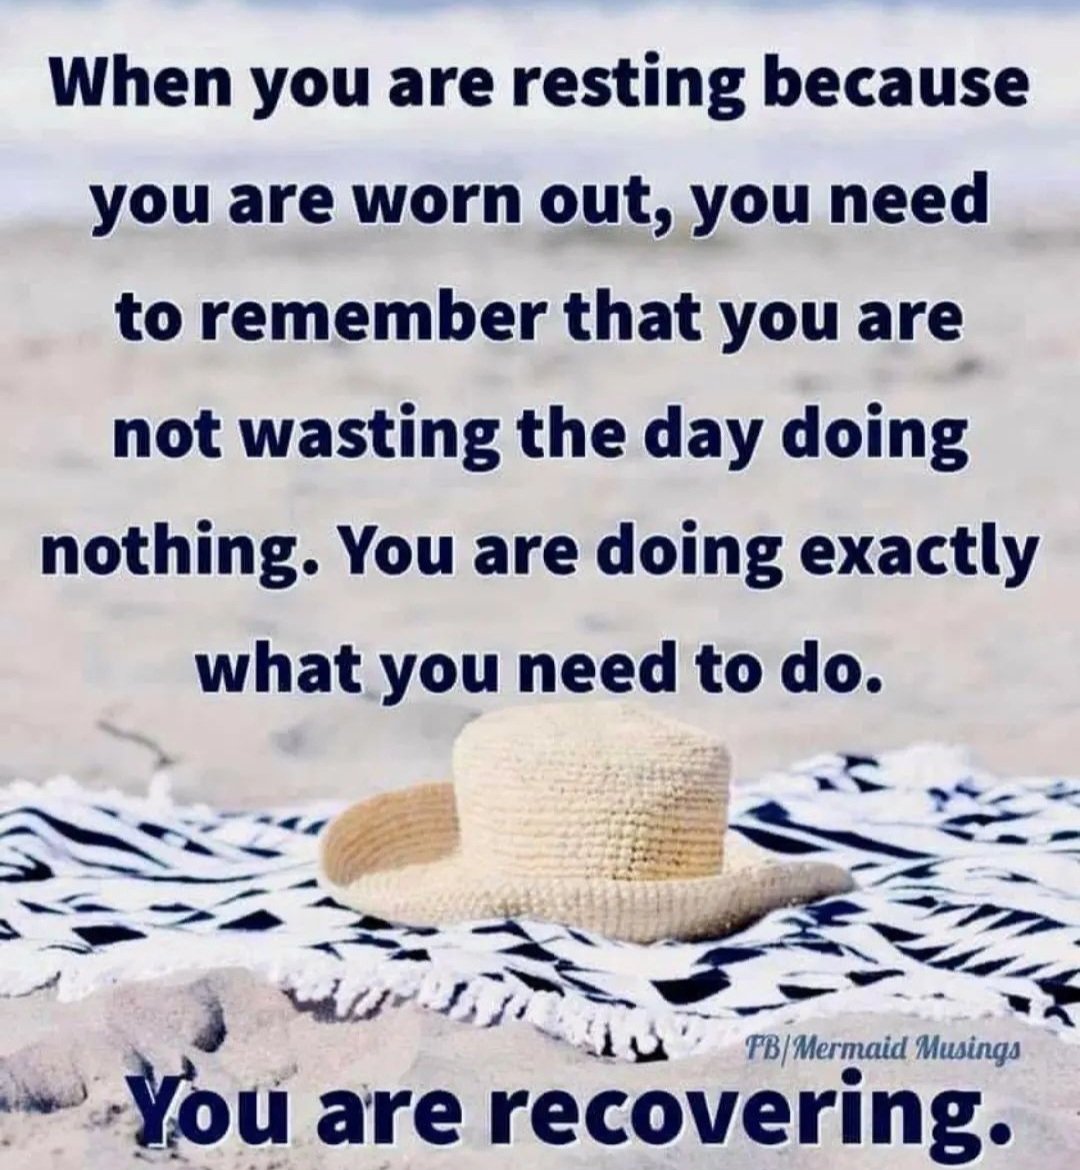 Resting is recovering...
#restdaysmatter
#restwhenyouneedto #takecareofyourself
#paceyourself 
#dontoverdoit
#giveyourselfabreak #letyourbodyheal
#fibromyalgia #CFSME #fibrosupportbymonica